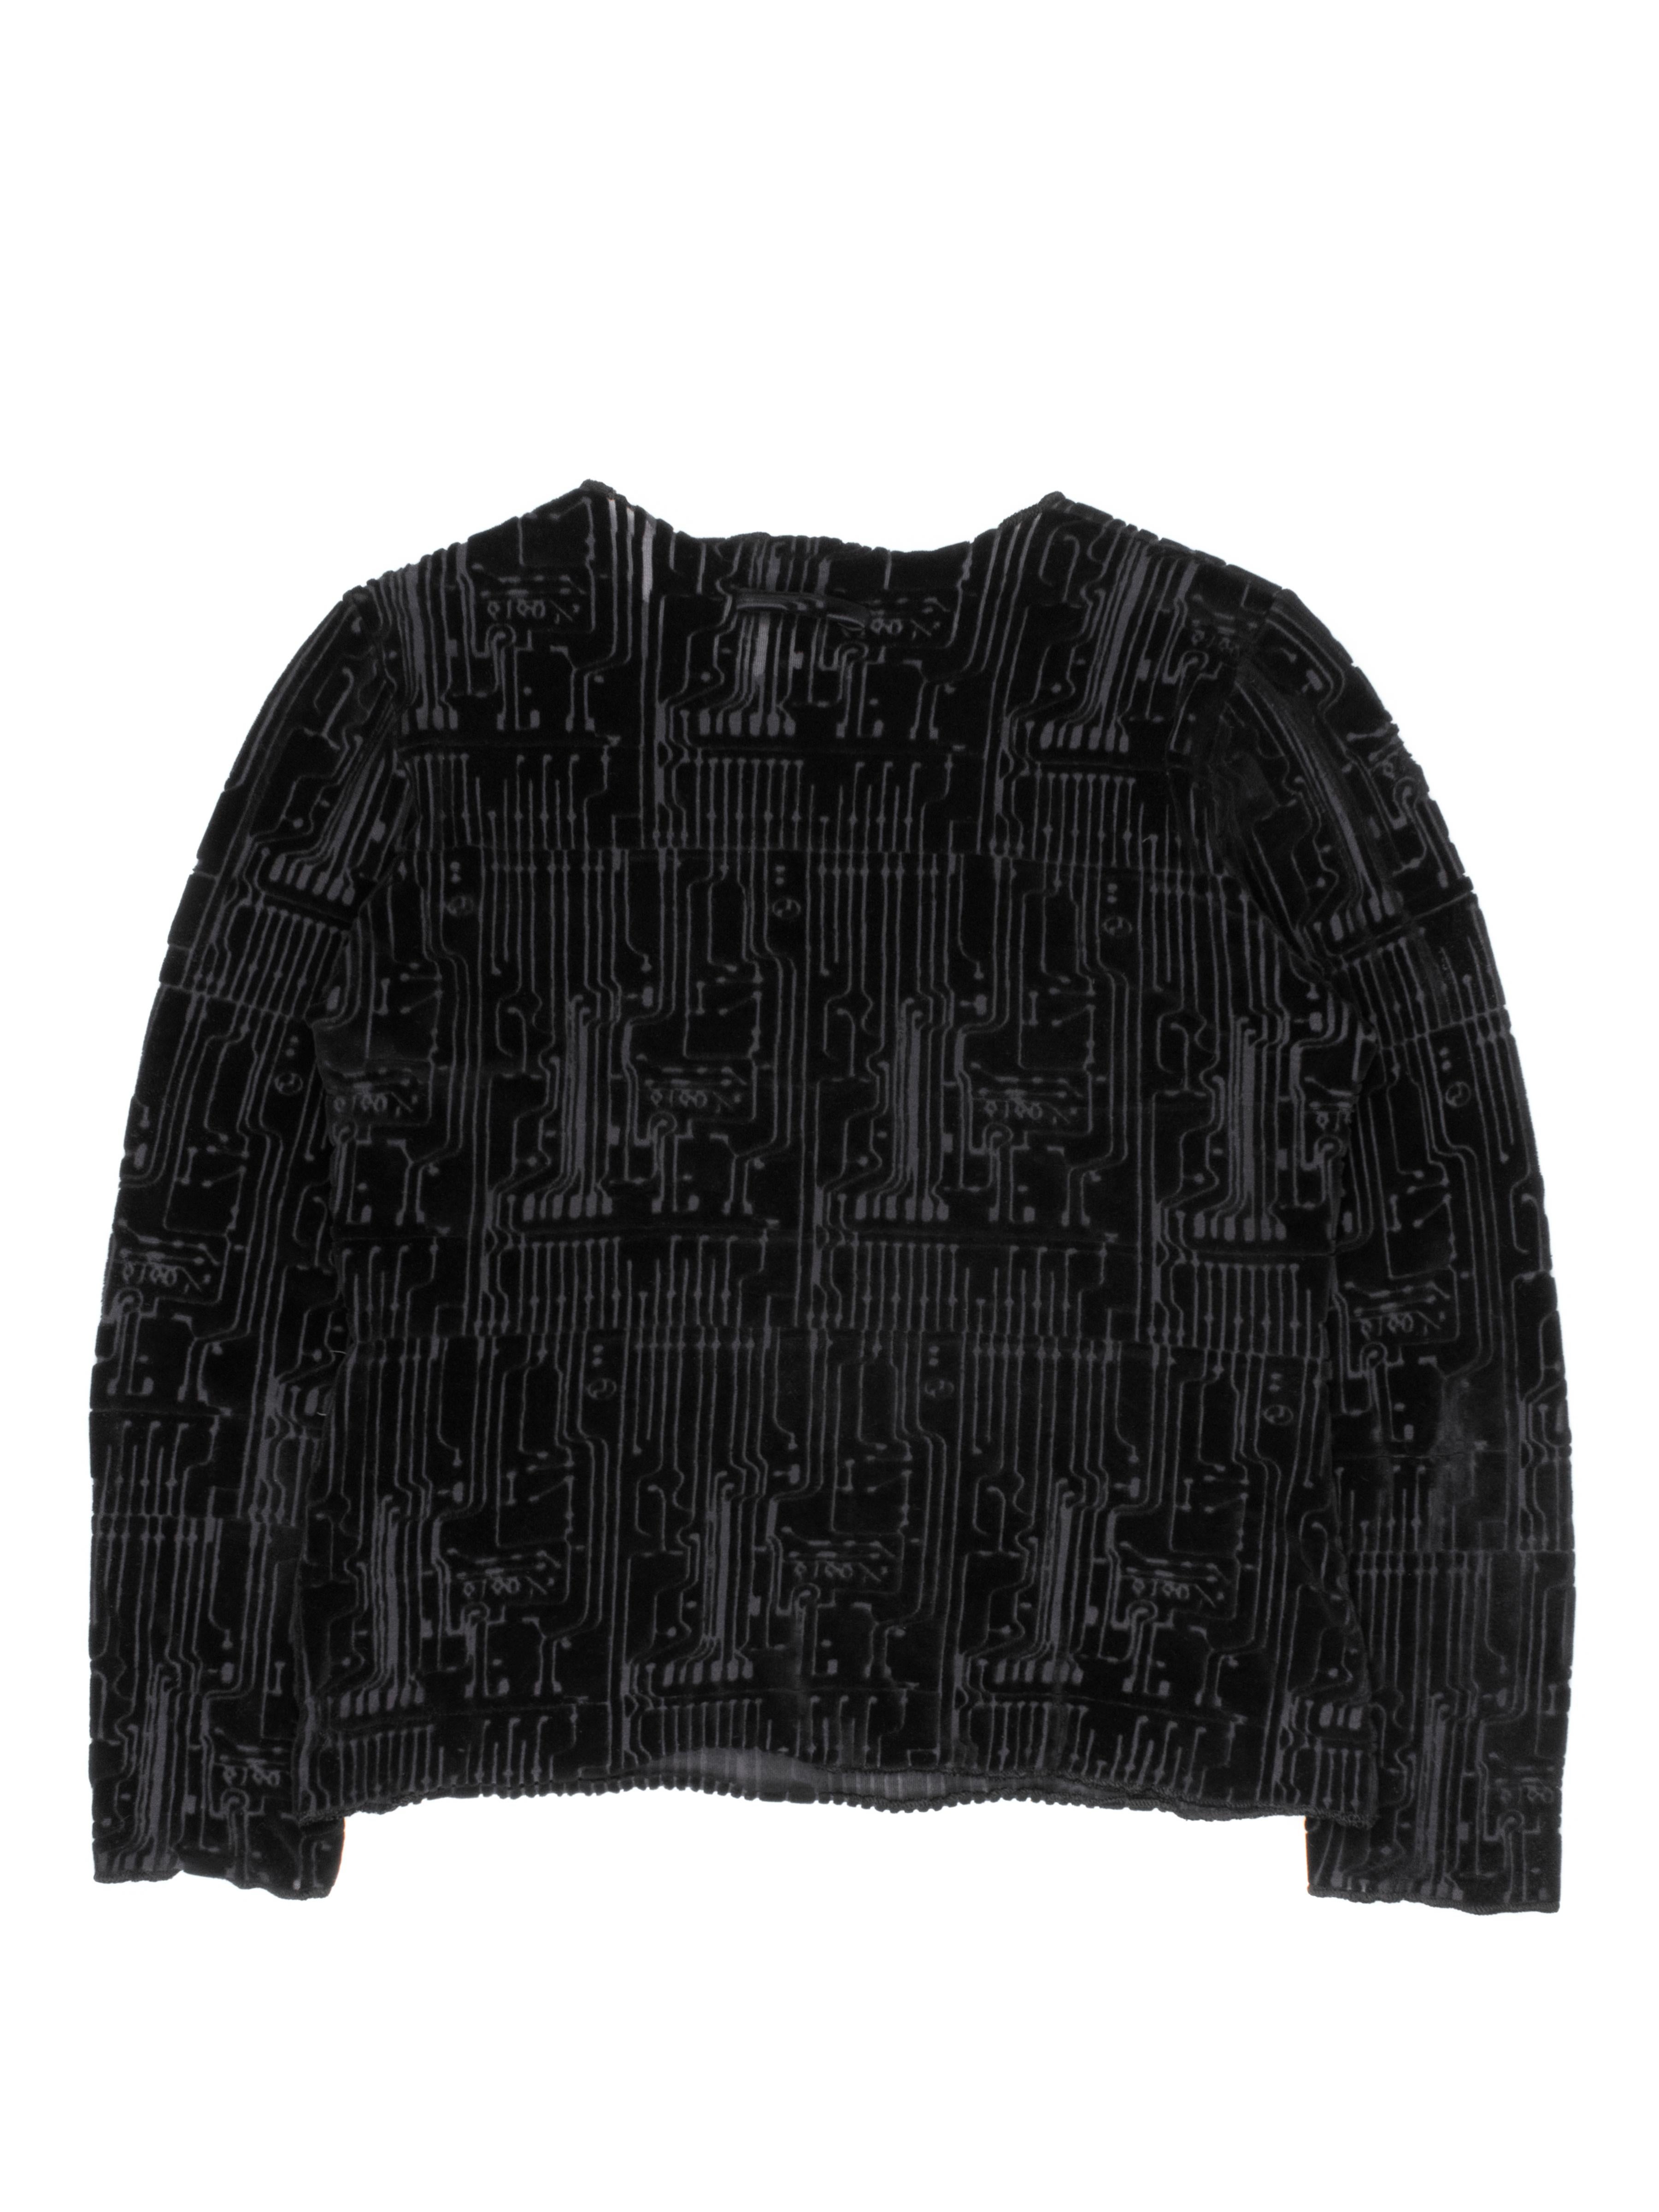 circuit board sweater jean paul gaultier